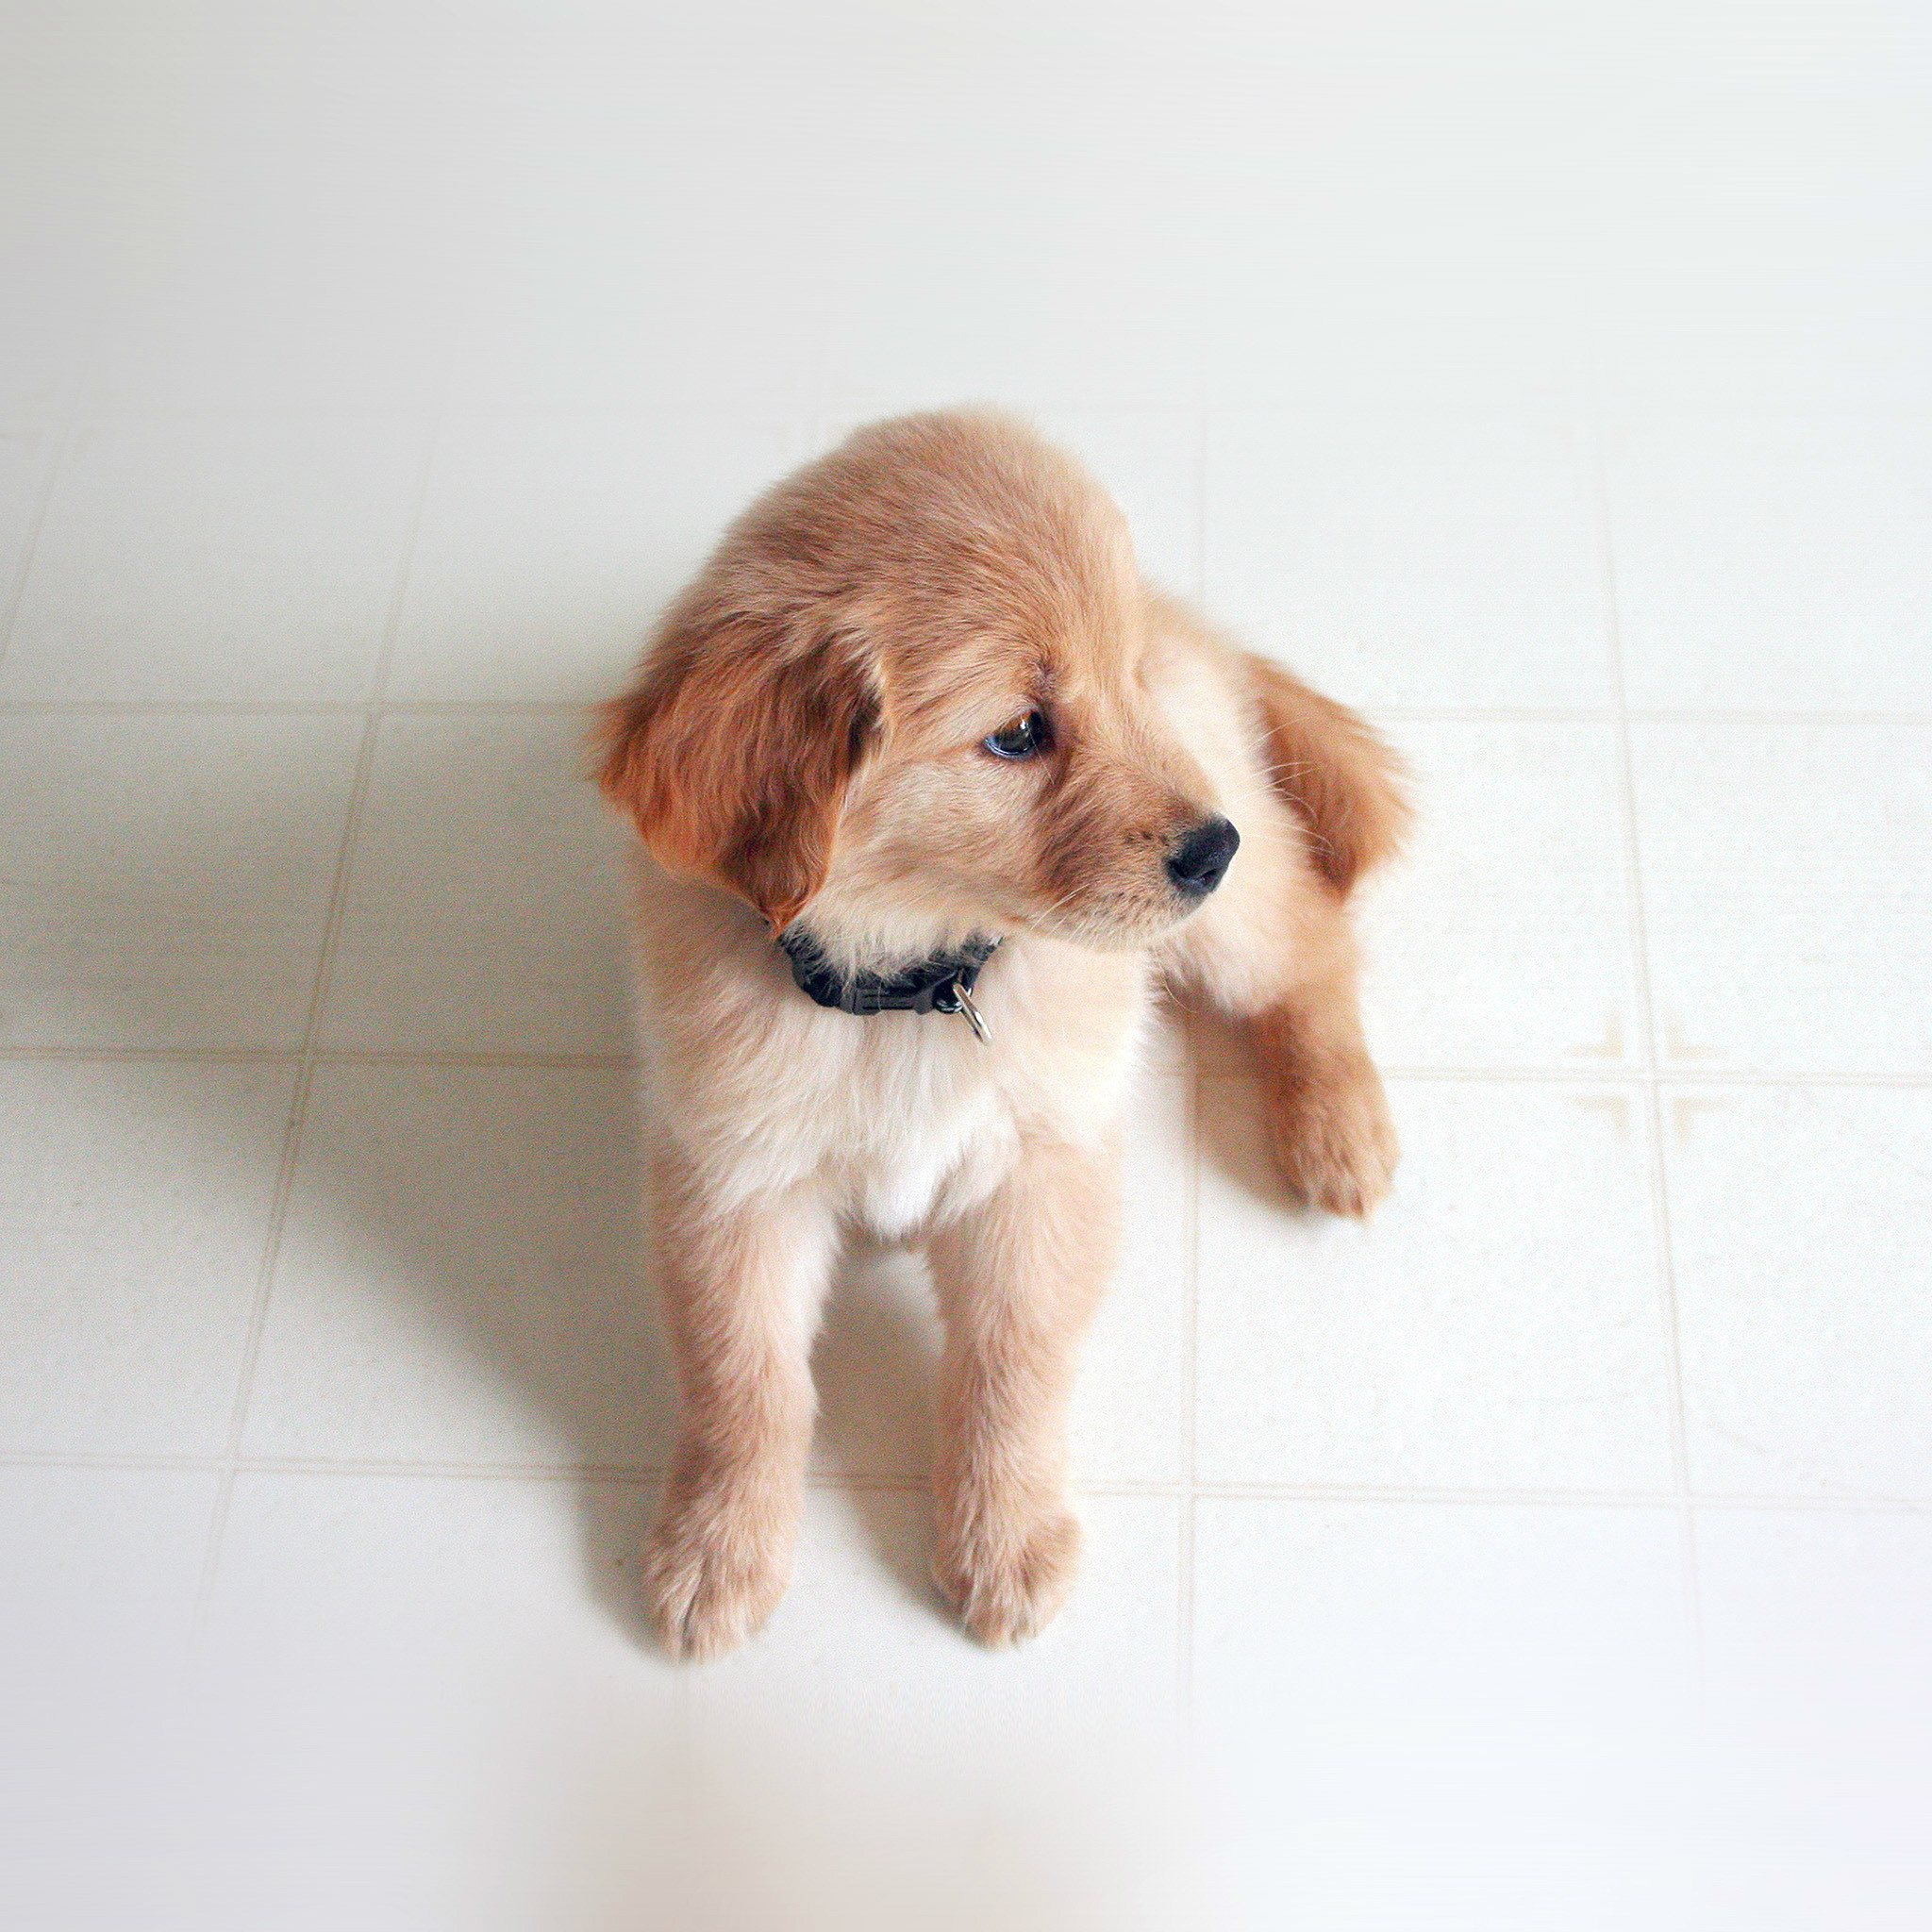 2048x2048 863 4: Puppy Love Cute Animal Nature Sitting Dog iPad Air wallpaper